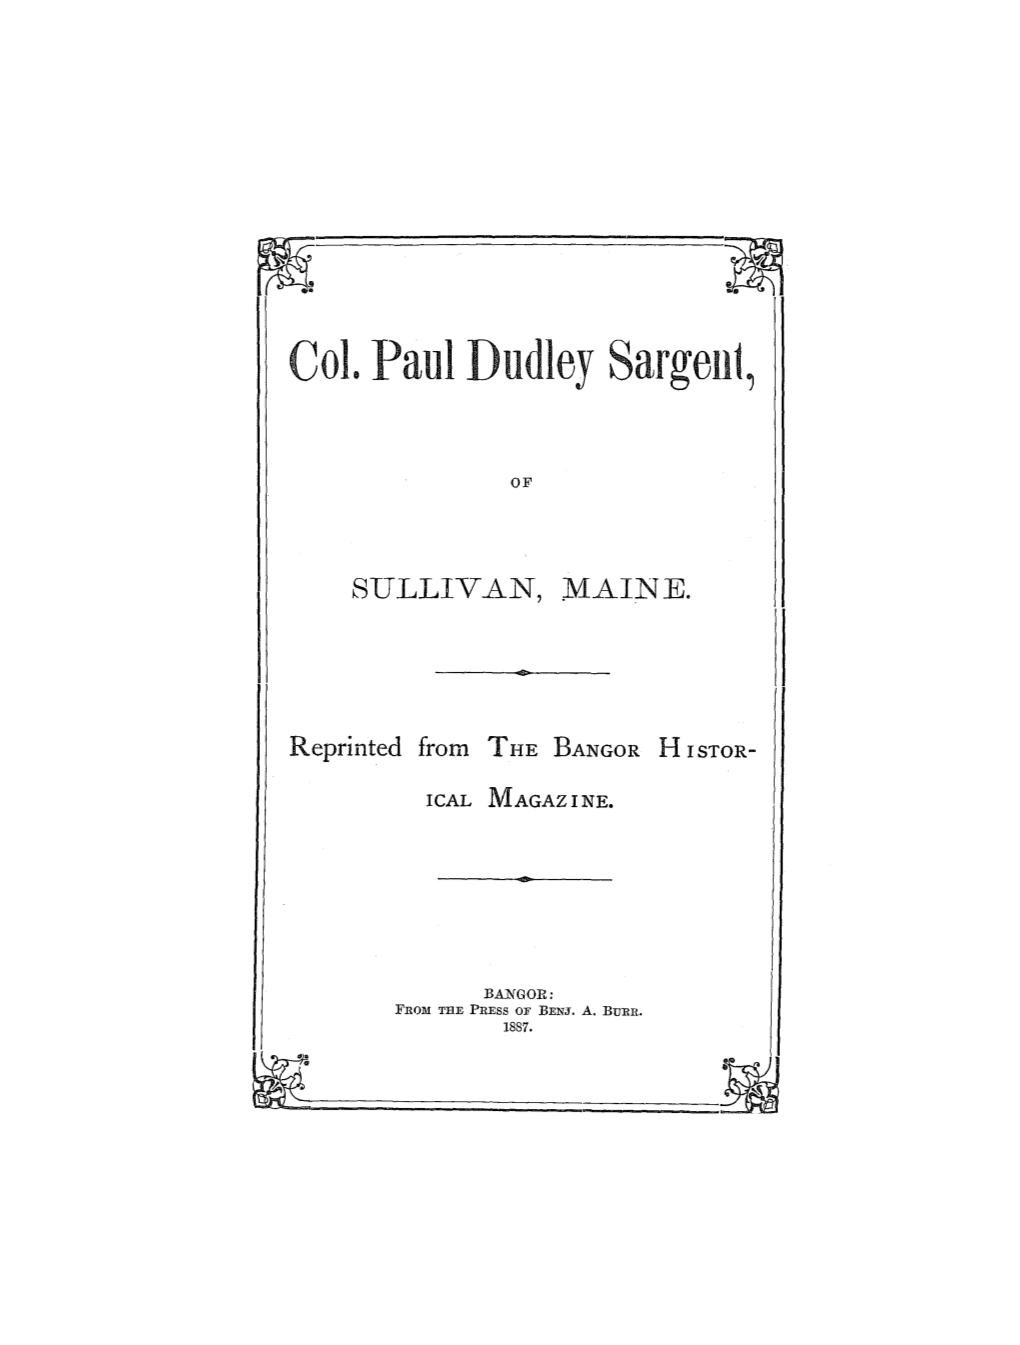 Col. Paul Dudley Sargent